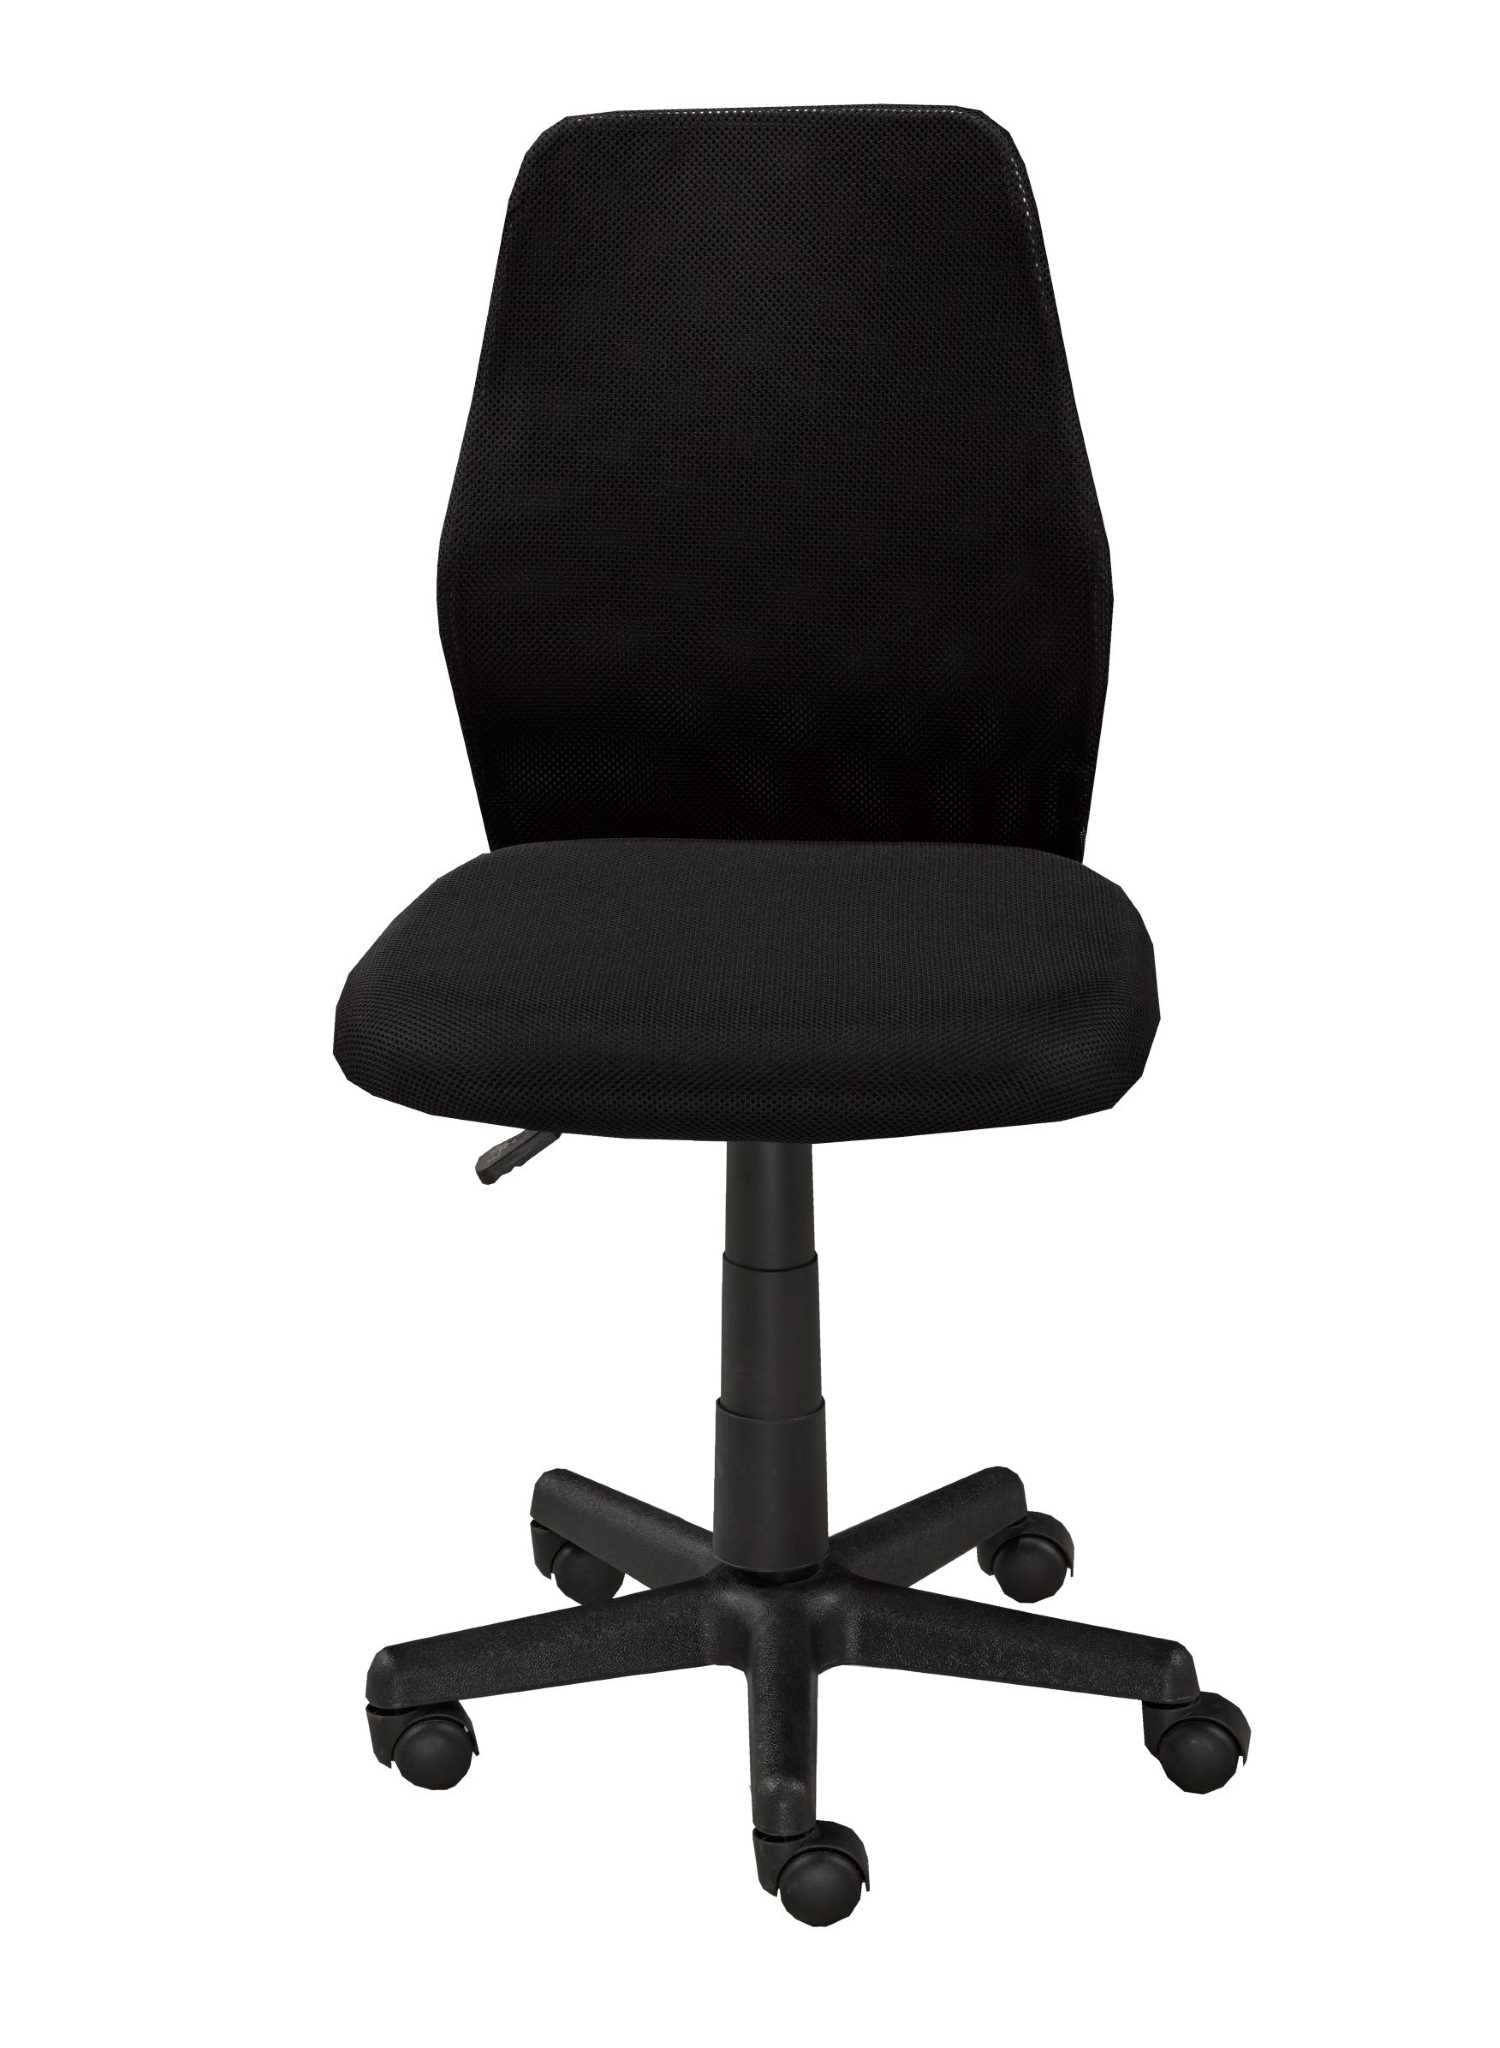 Black Office Chair - 8373-BLK